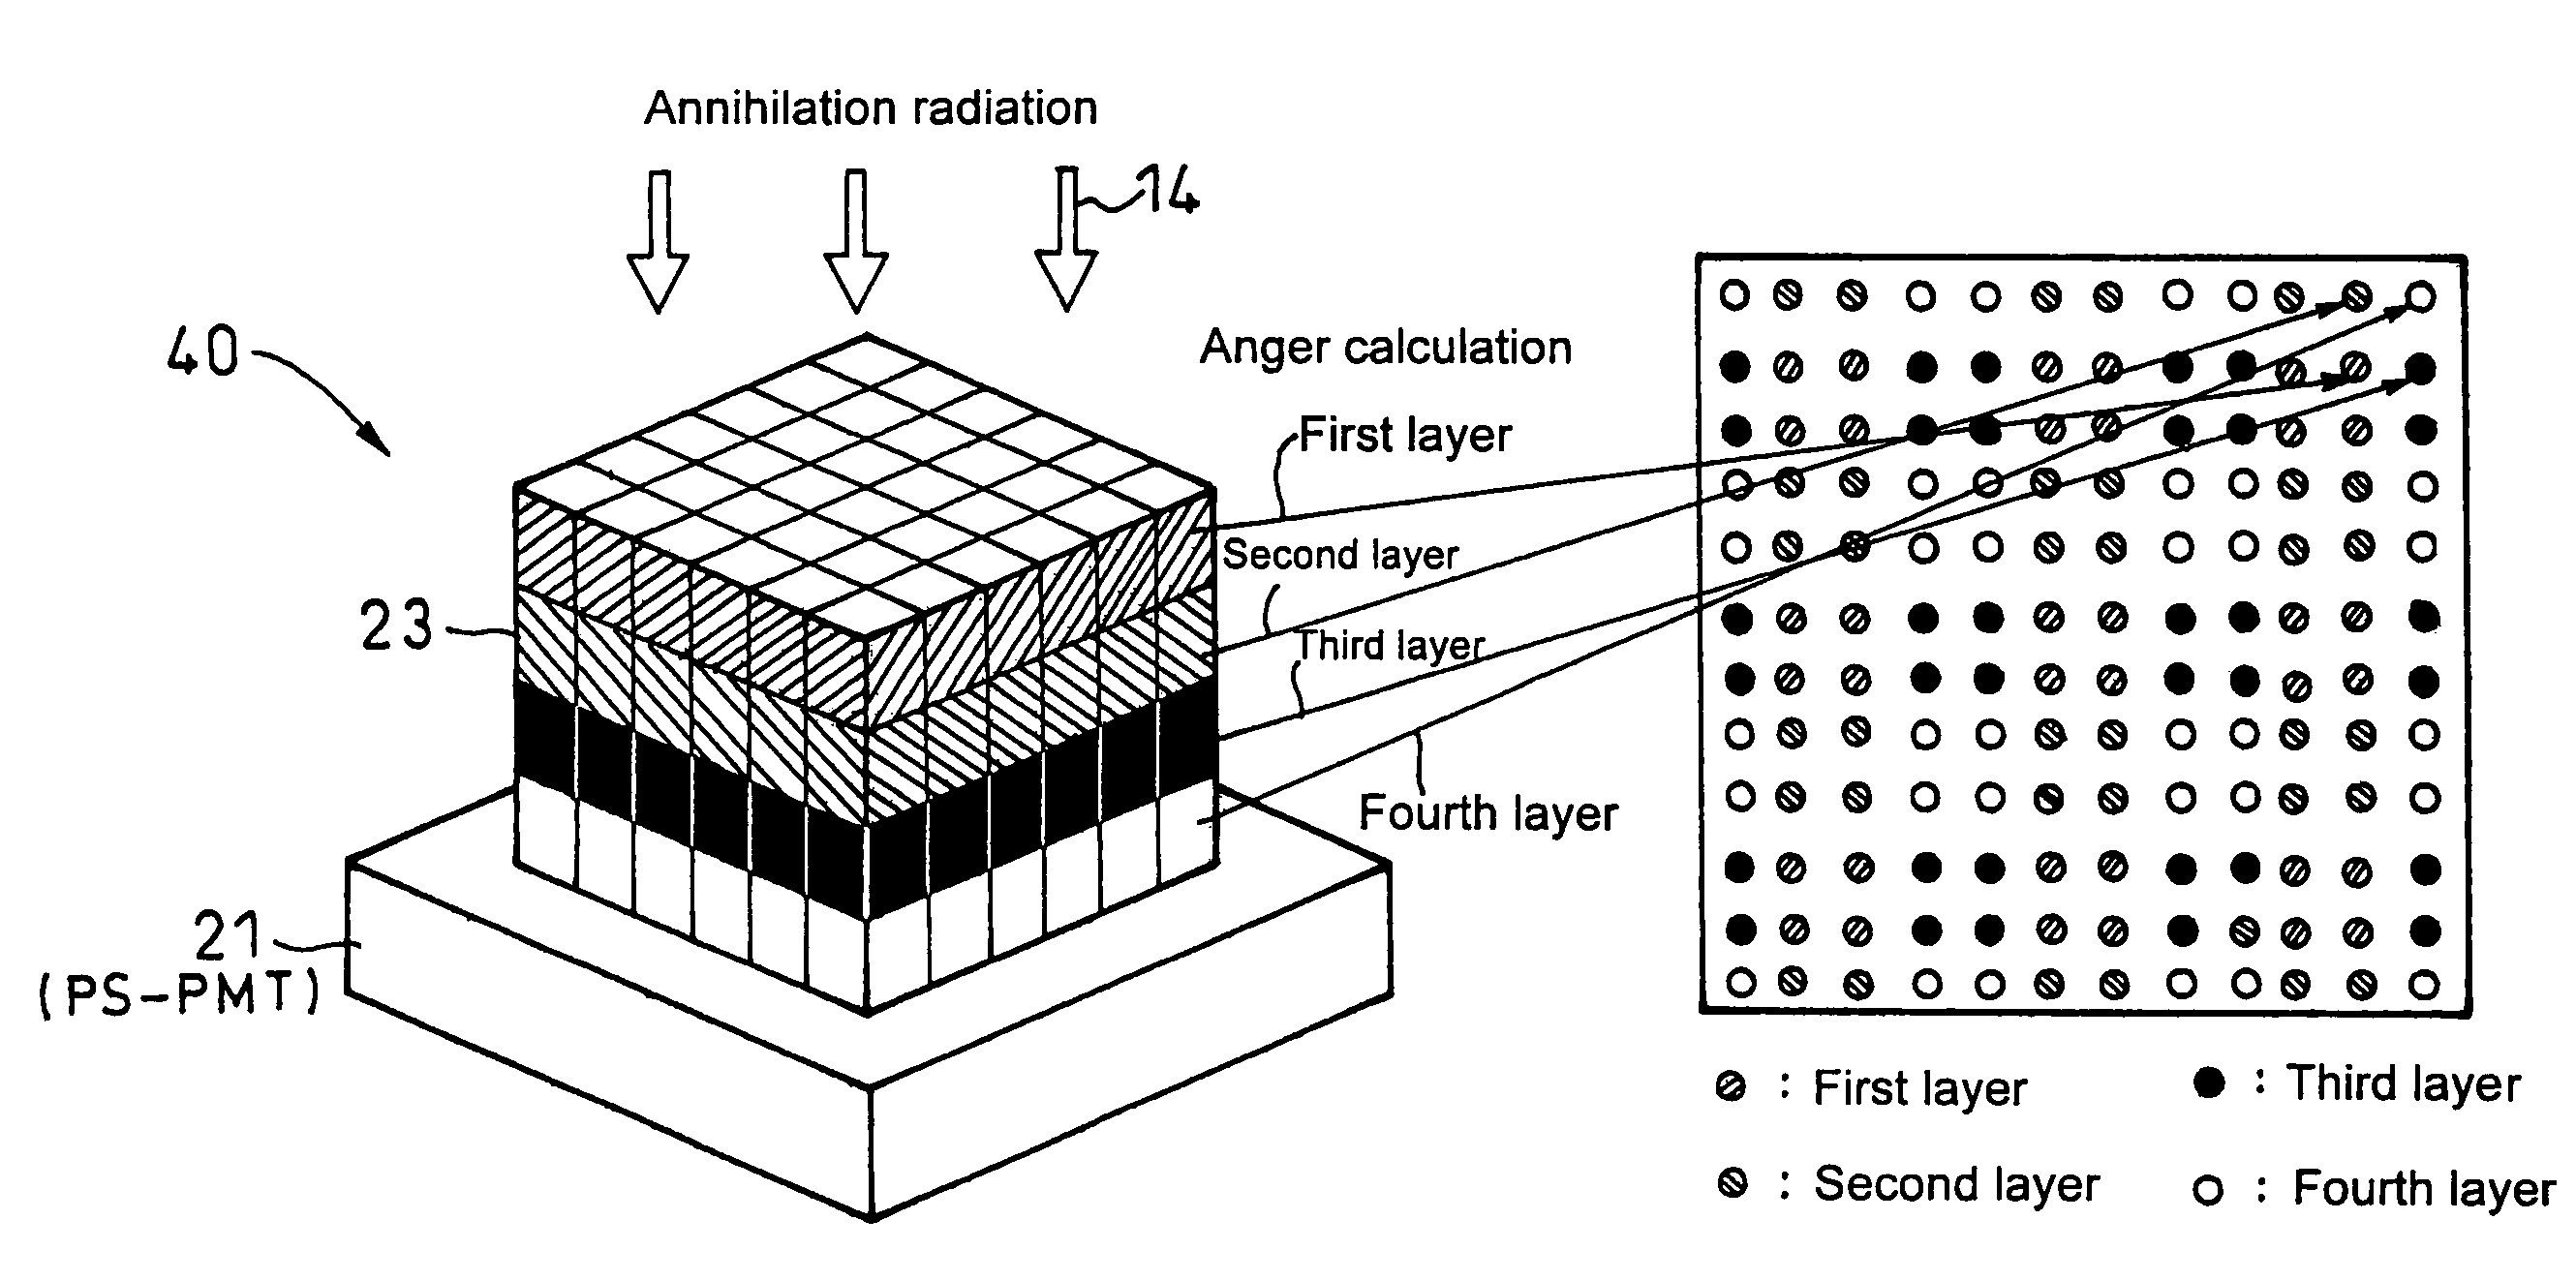 Positron emission tomography scanner and radiation detector